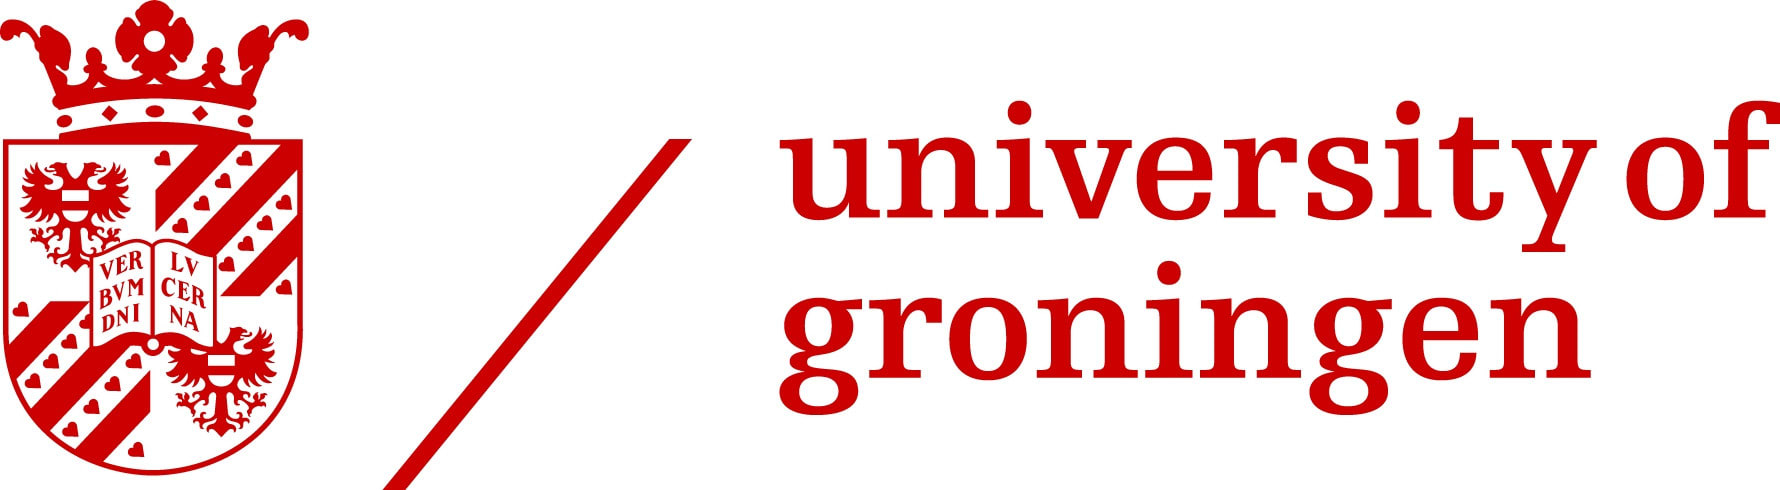 University Of Groningen Ranking Qs INFOLEARNERS